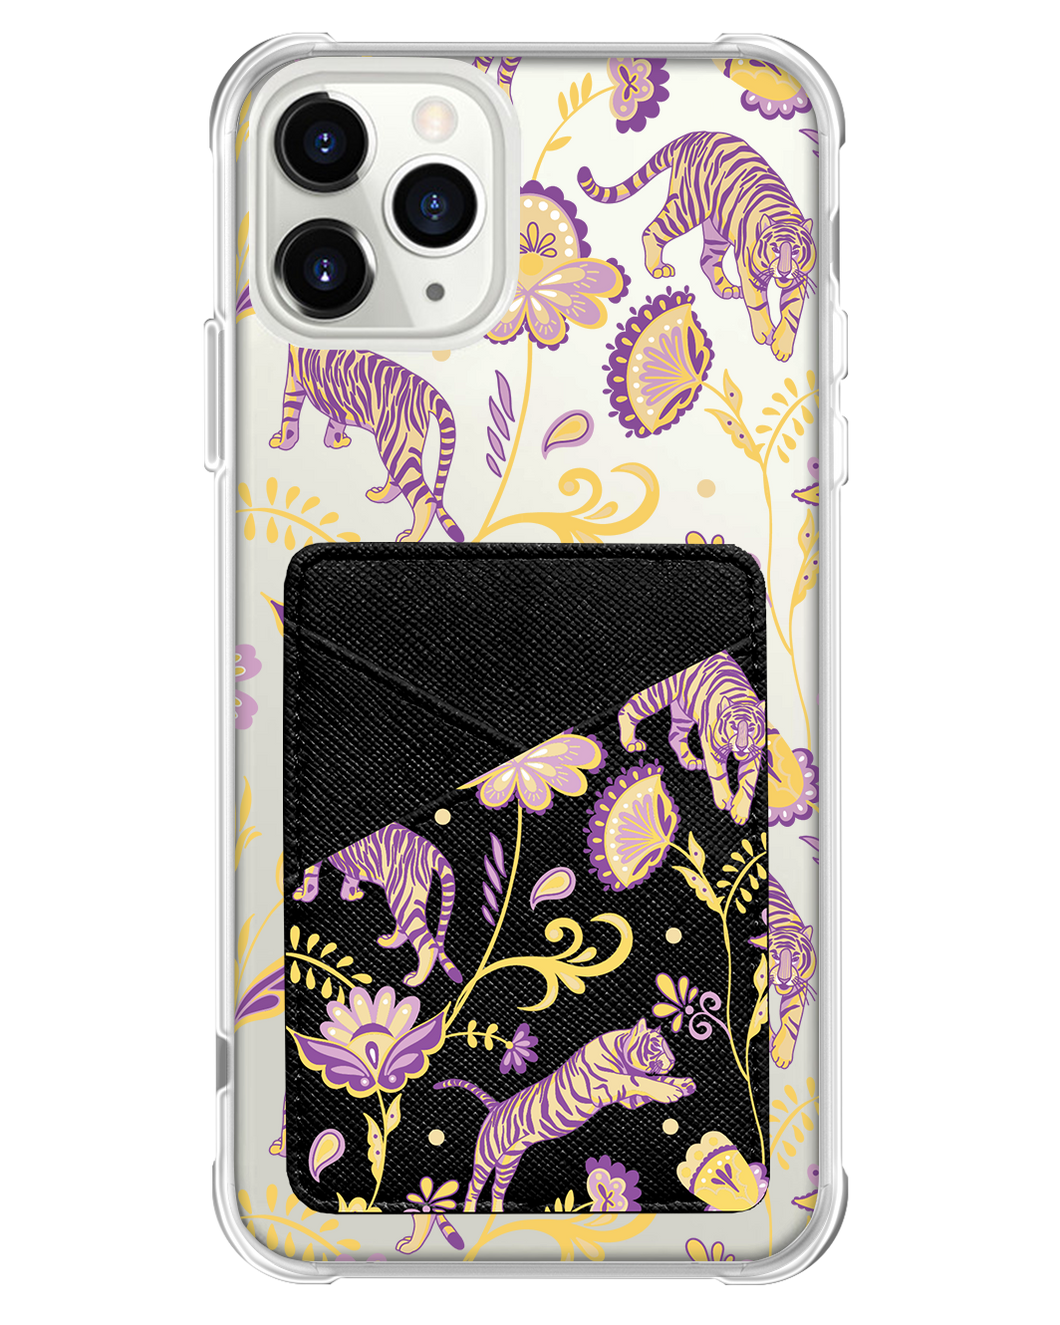 iPhone Phone Wallet Case - Tiger & Floral 4.0